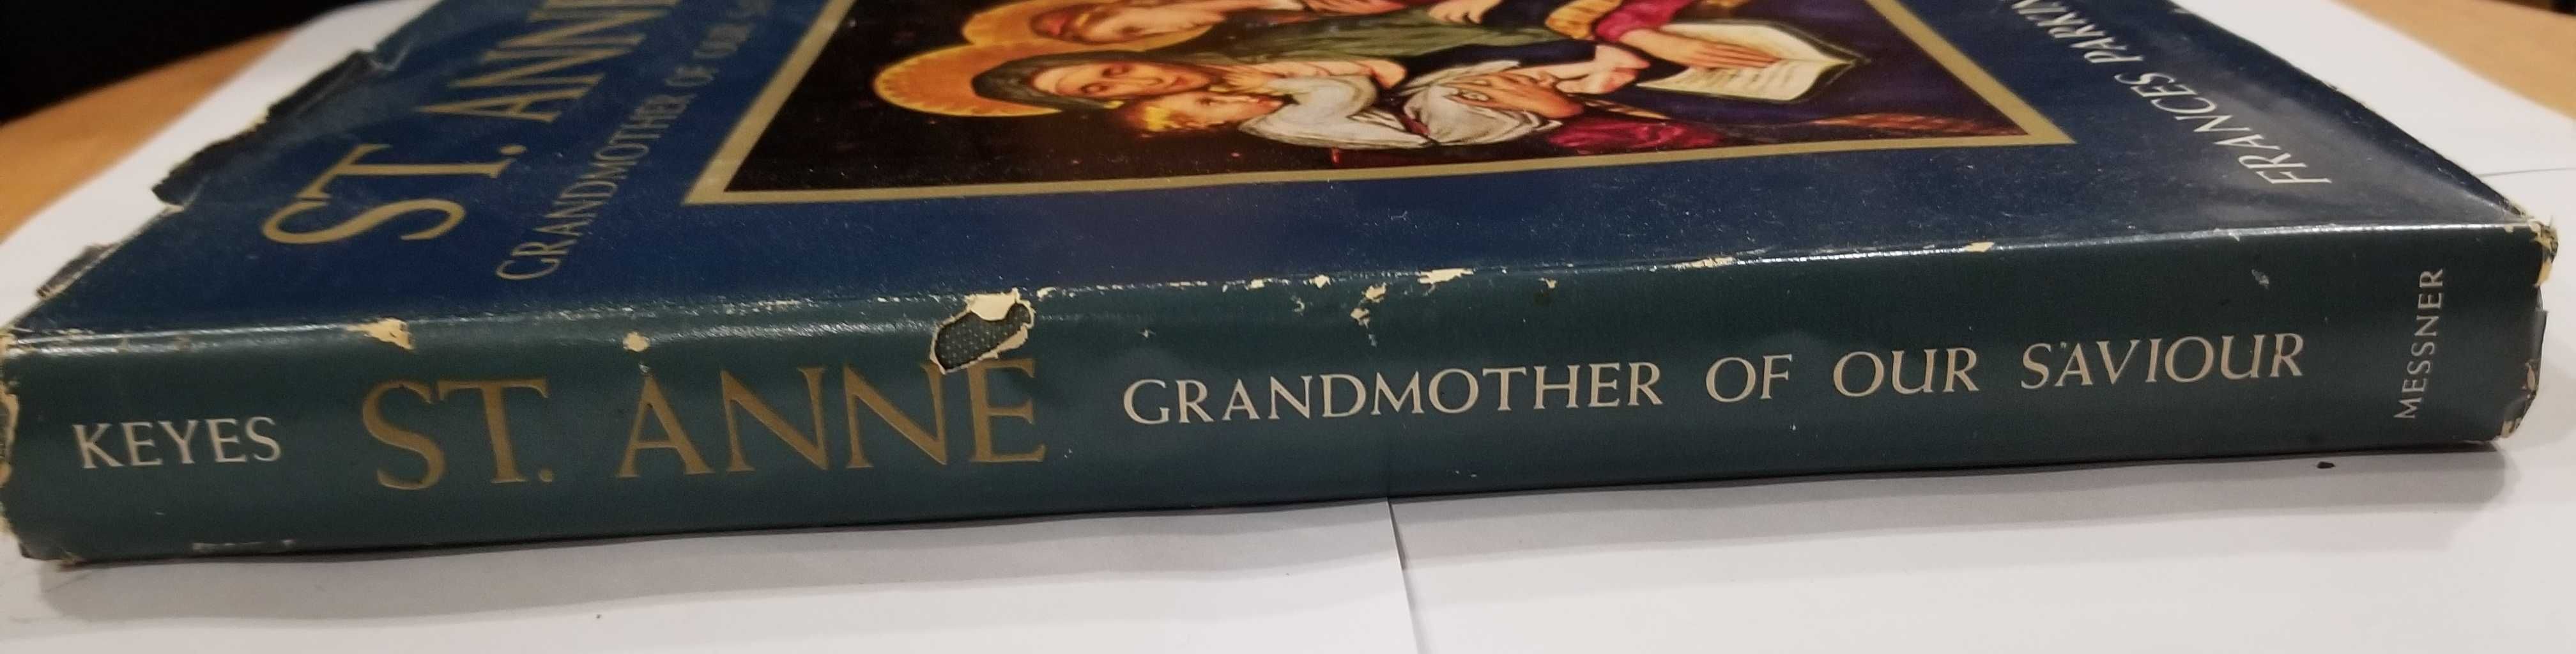 Livro Ref:PAR4 - F. P. Keyes - St. Anne: Grandmother of Our Saviour